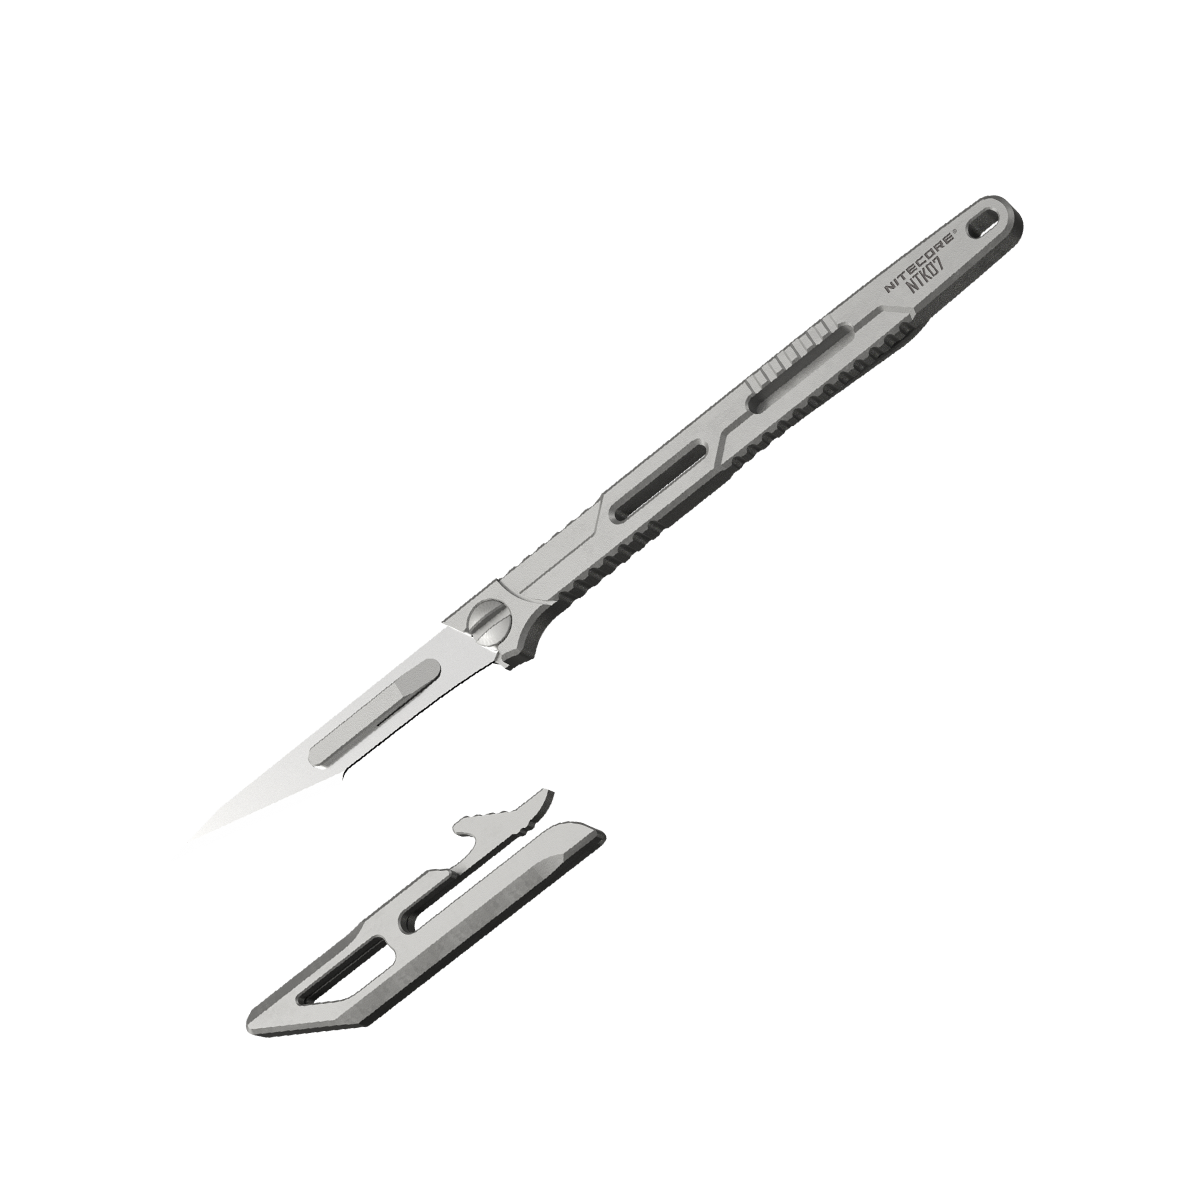 Nitecore NTK07 Titanium Utility knife EDC Knife with Replaceable Blades